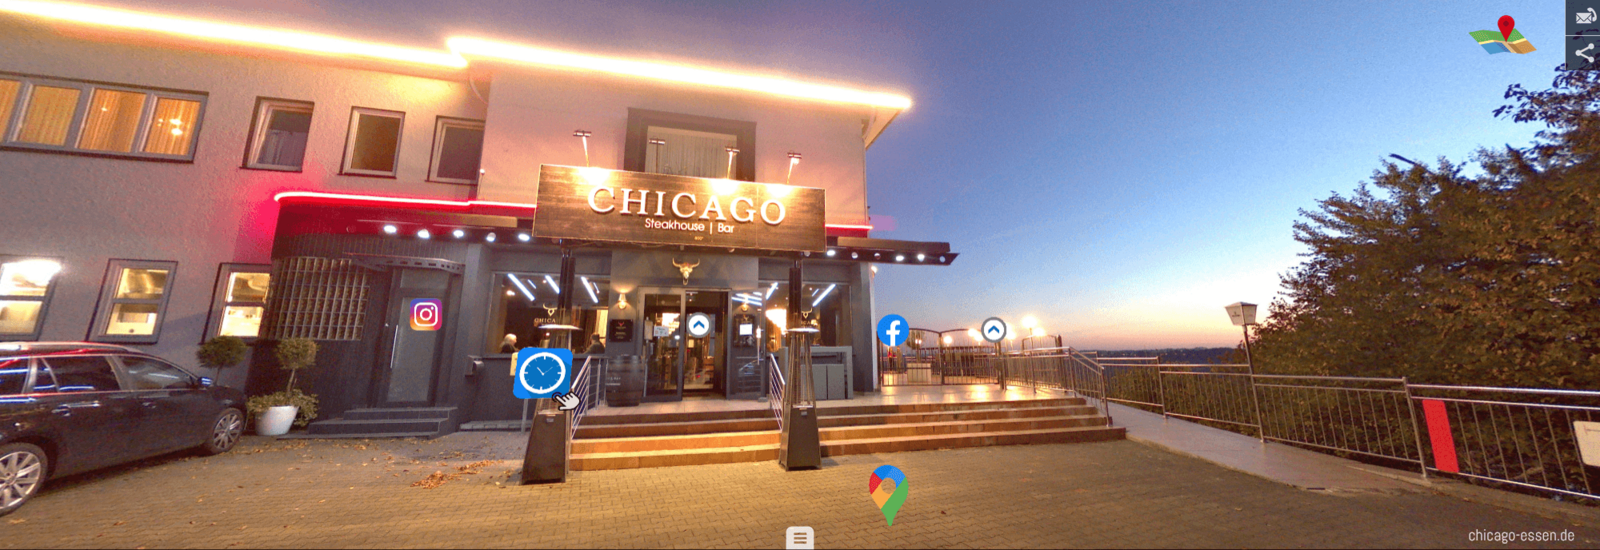 360-Grad-Tour Steakhouse Chicago